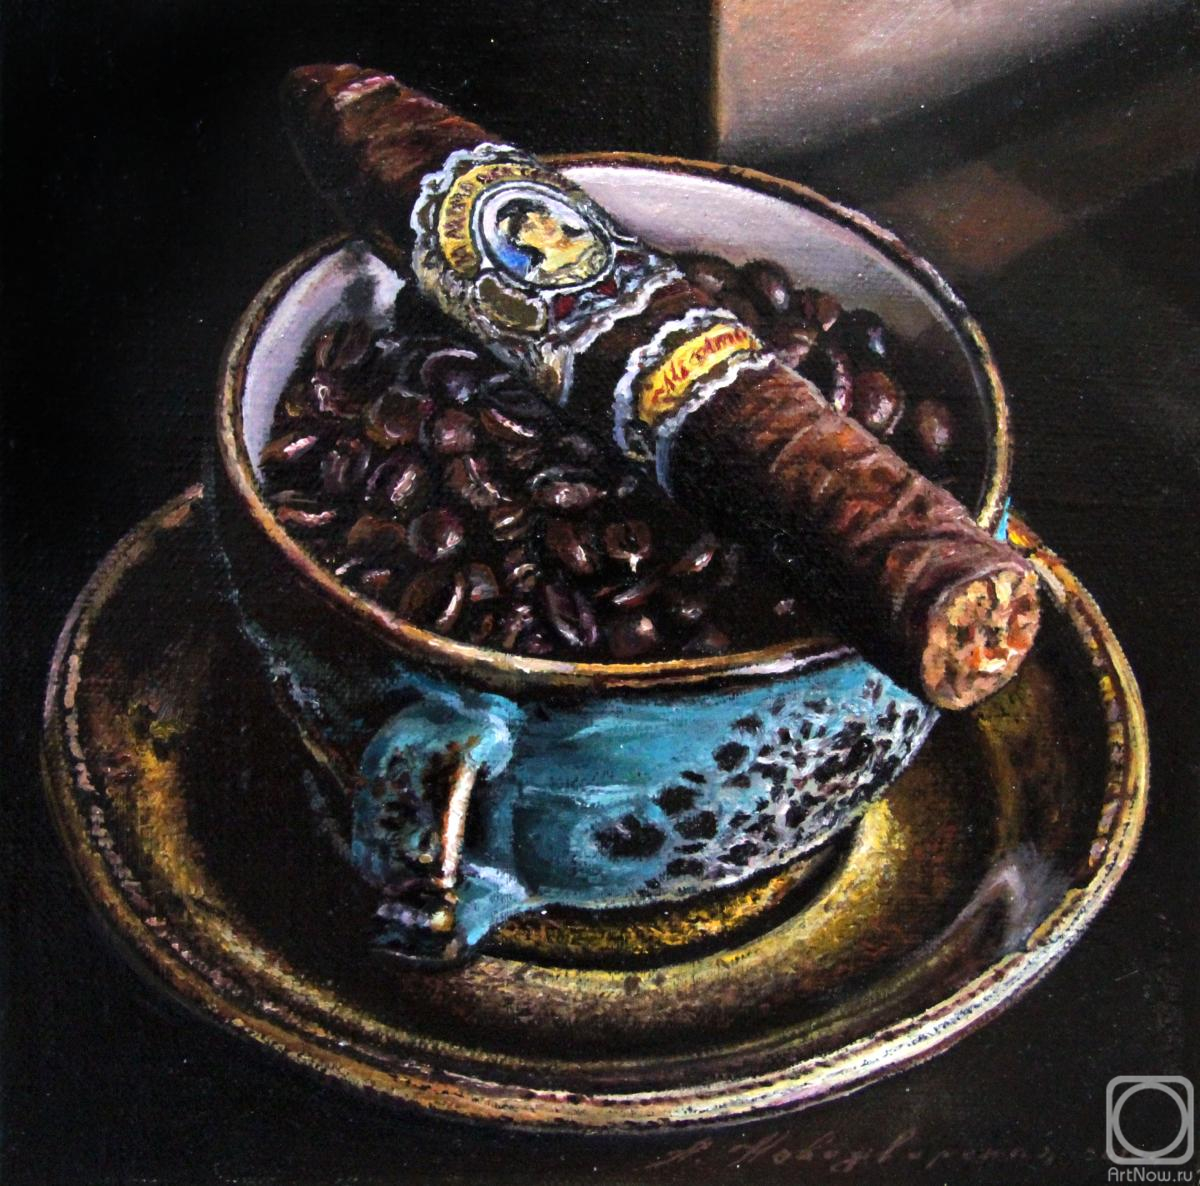 Novodvorskaya Alexandra. "Cup with coffee beans and cigar"